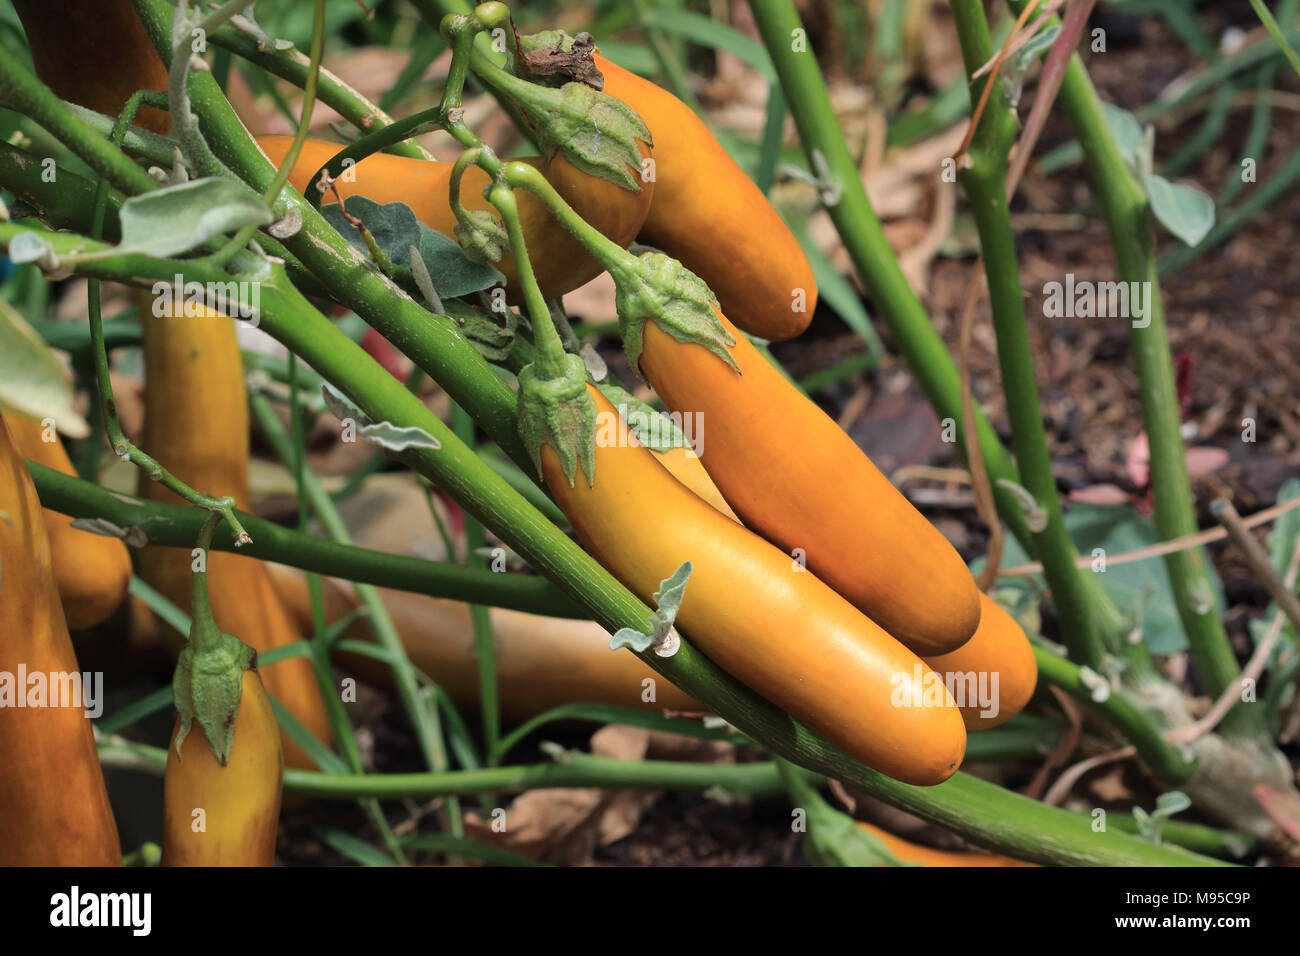 Overripe eggplants have been left on a bush Stock Photo